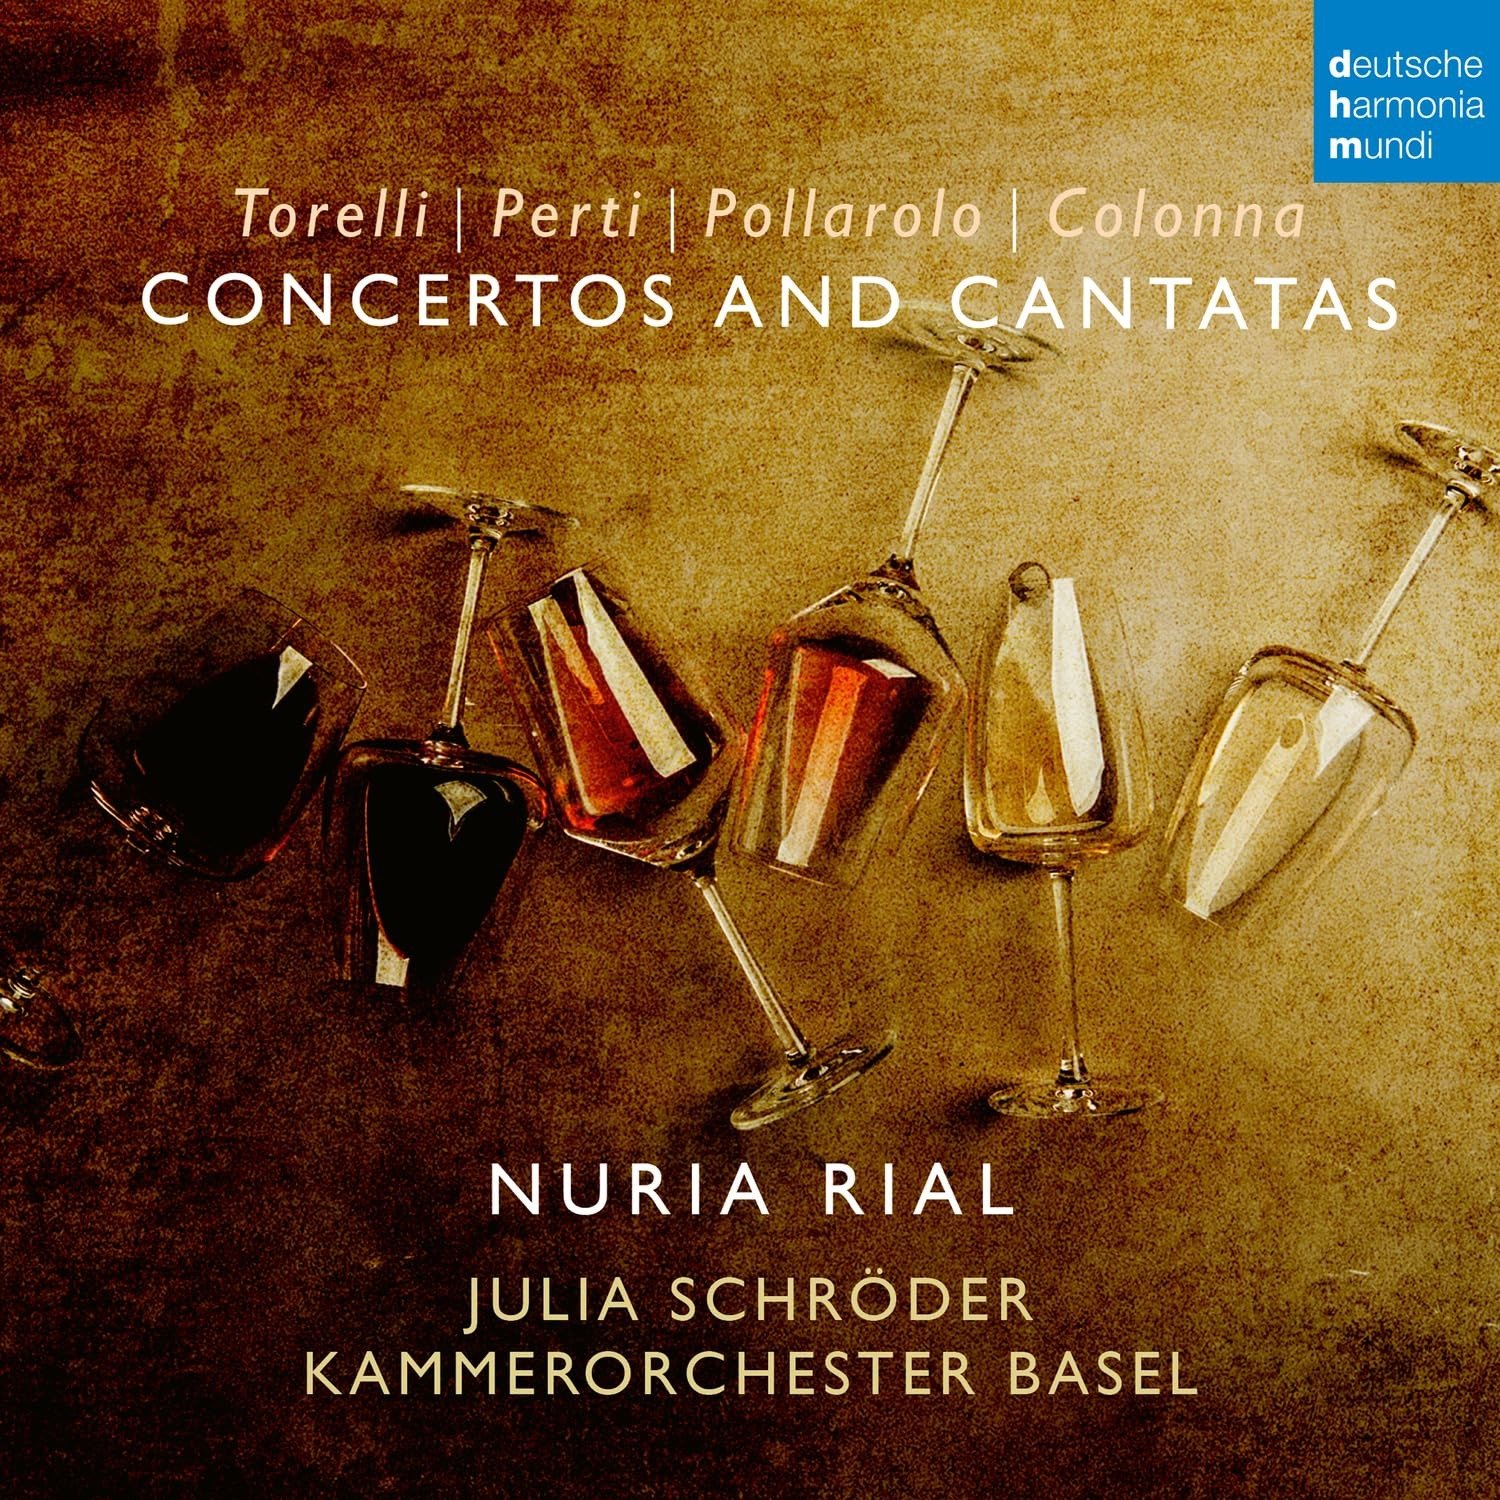 CD Shop - RIAL, NURIA / KAMMERORCHE Colonna, Perti, Pollarolo, Torelli: Cantatas & Concertos